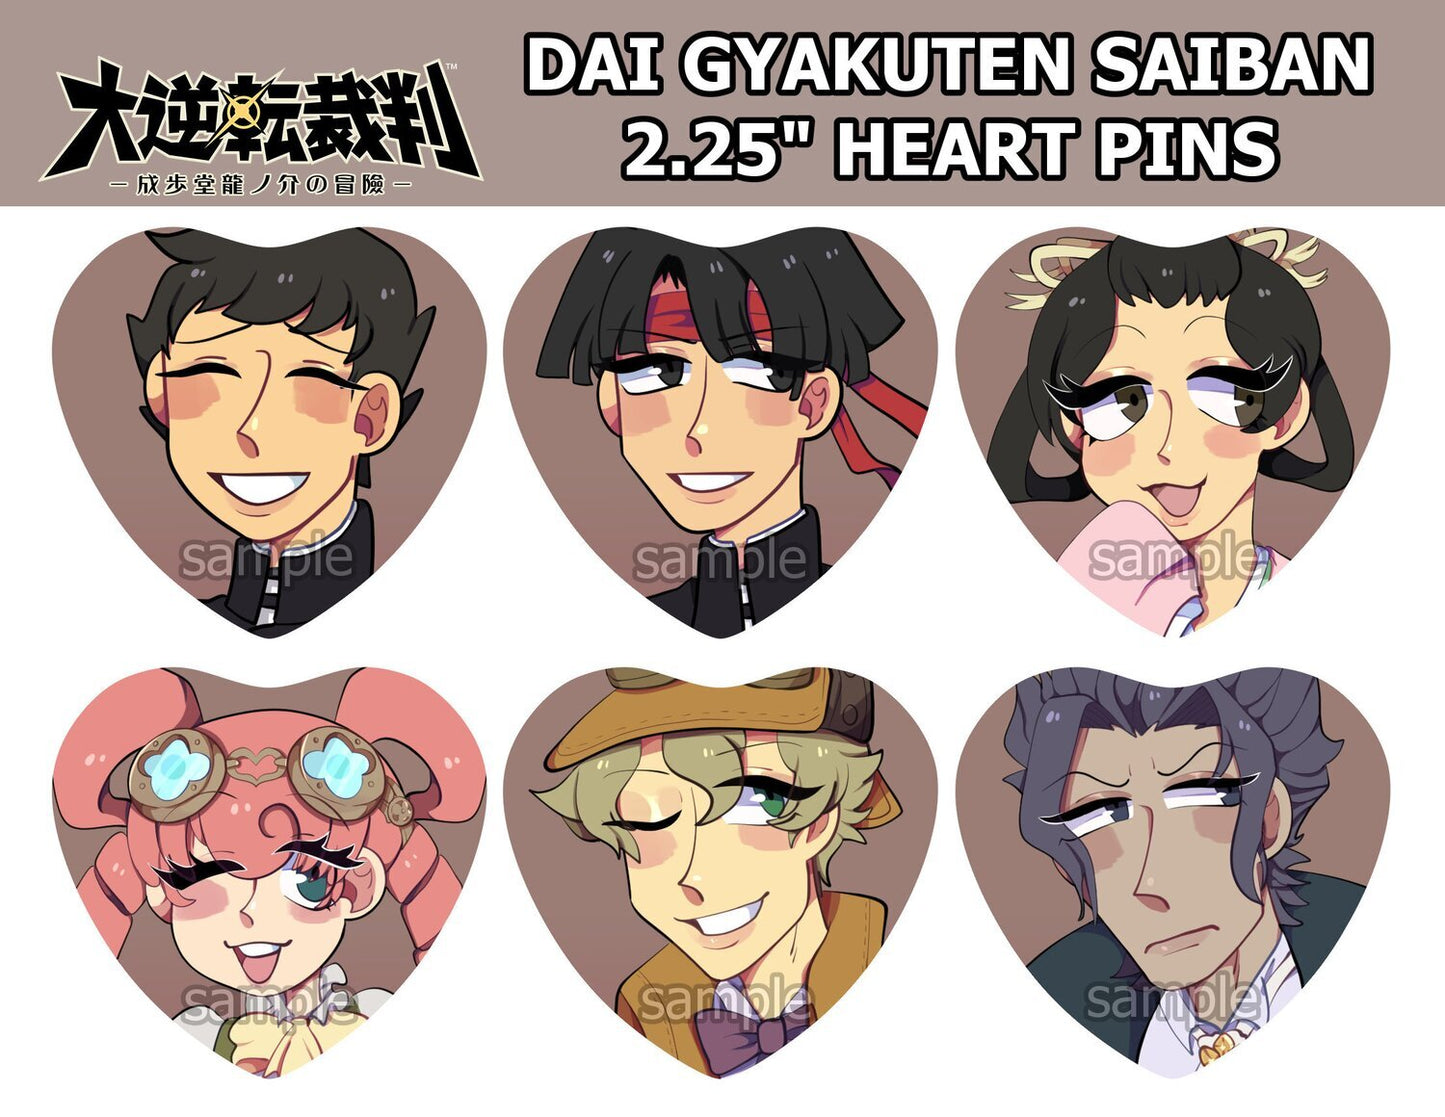 RETIRING Dai Gyakuten Saiban / The Great Ace Attorney Heart Pins